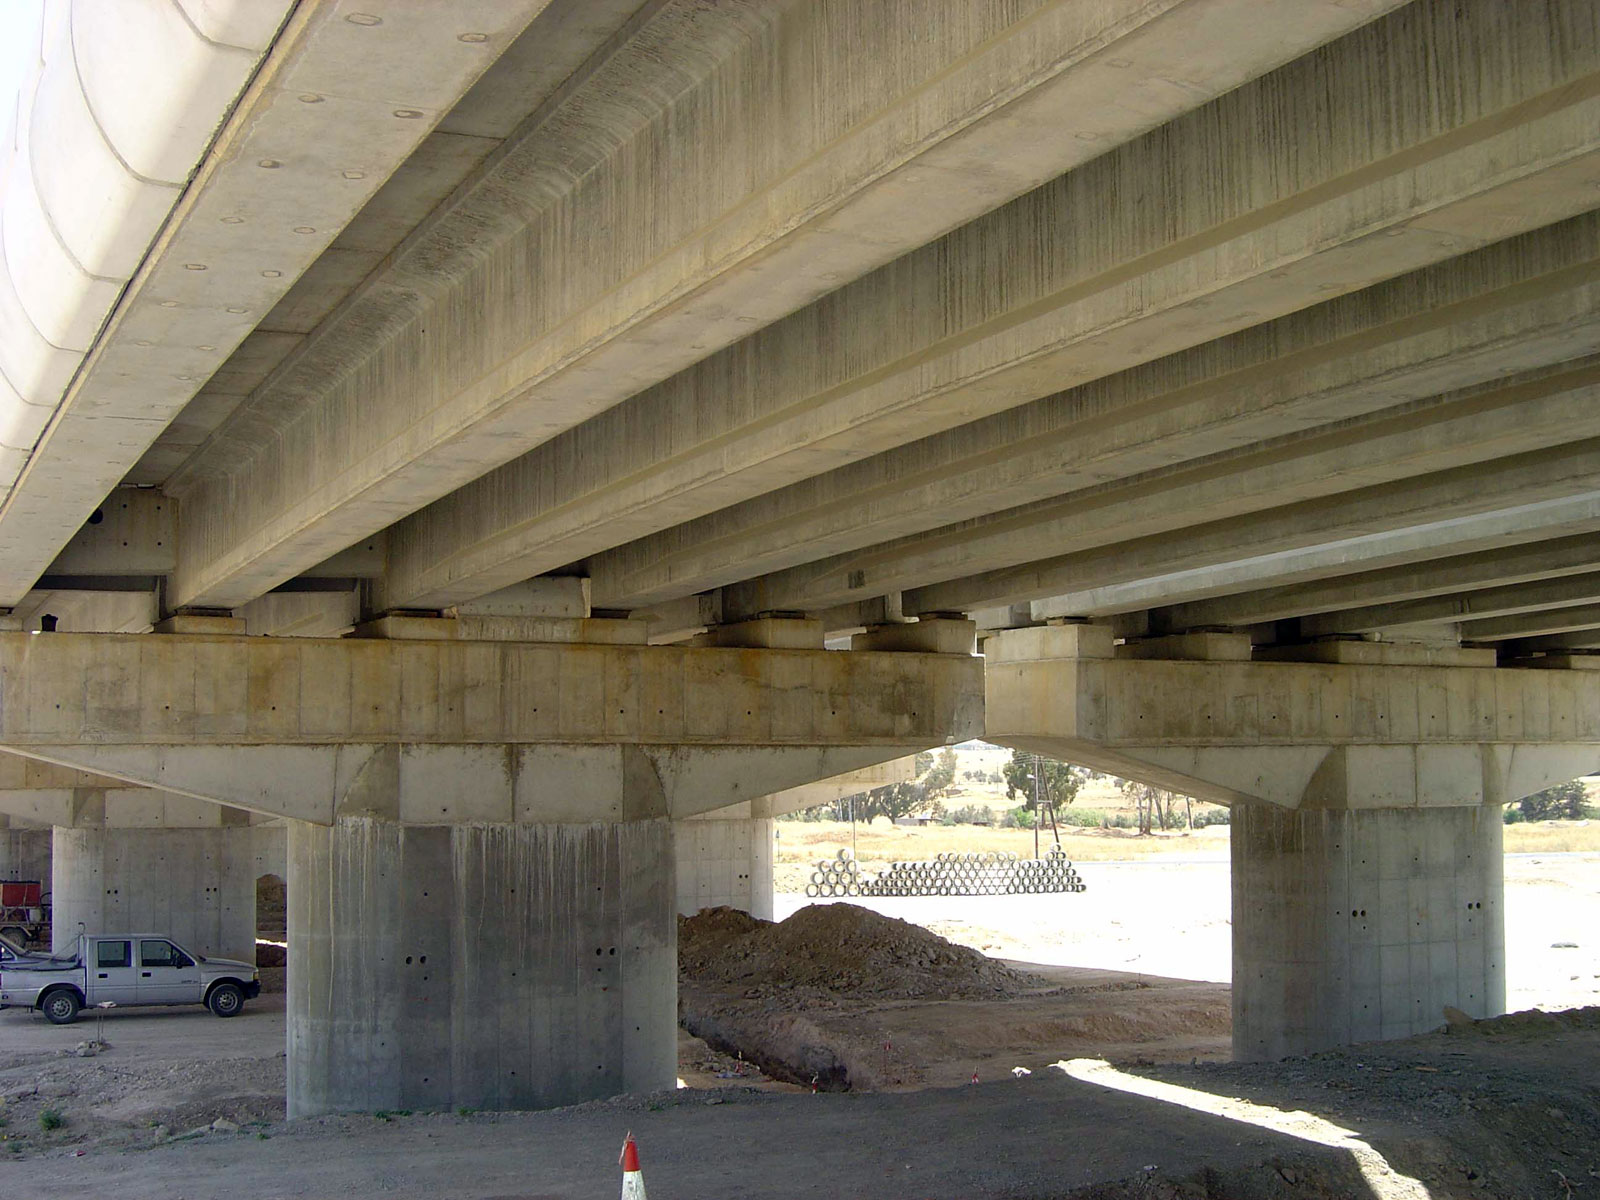 D2 bridge, constructed with the precast beam method